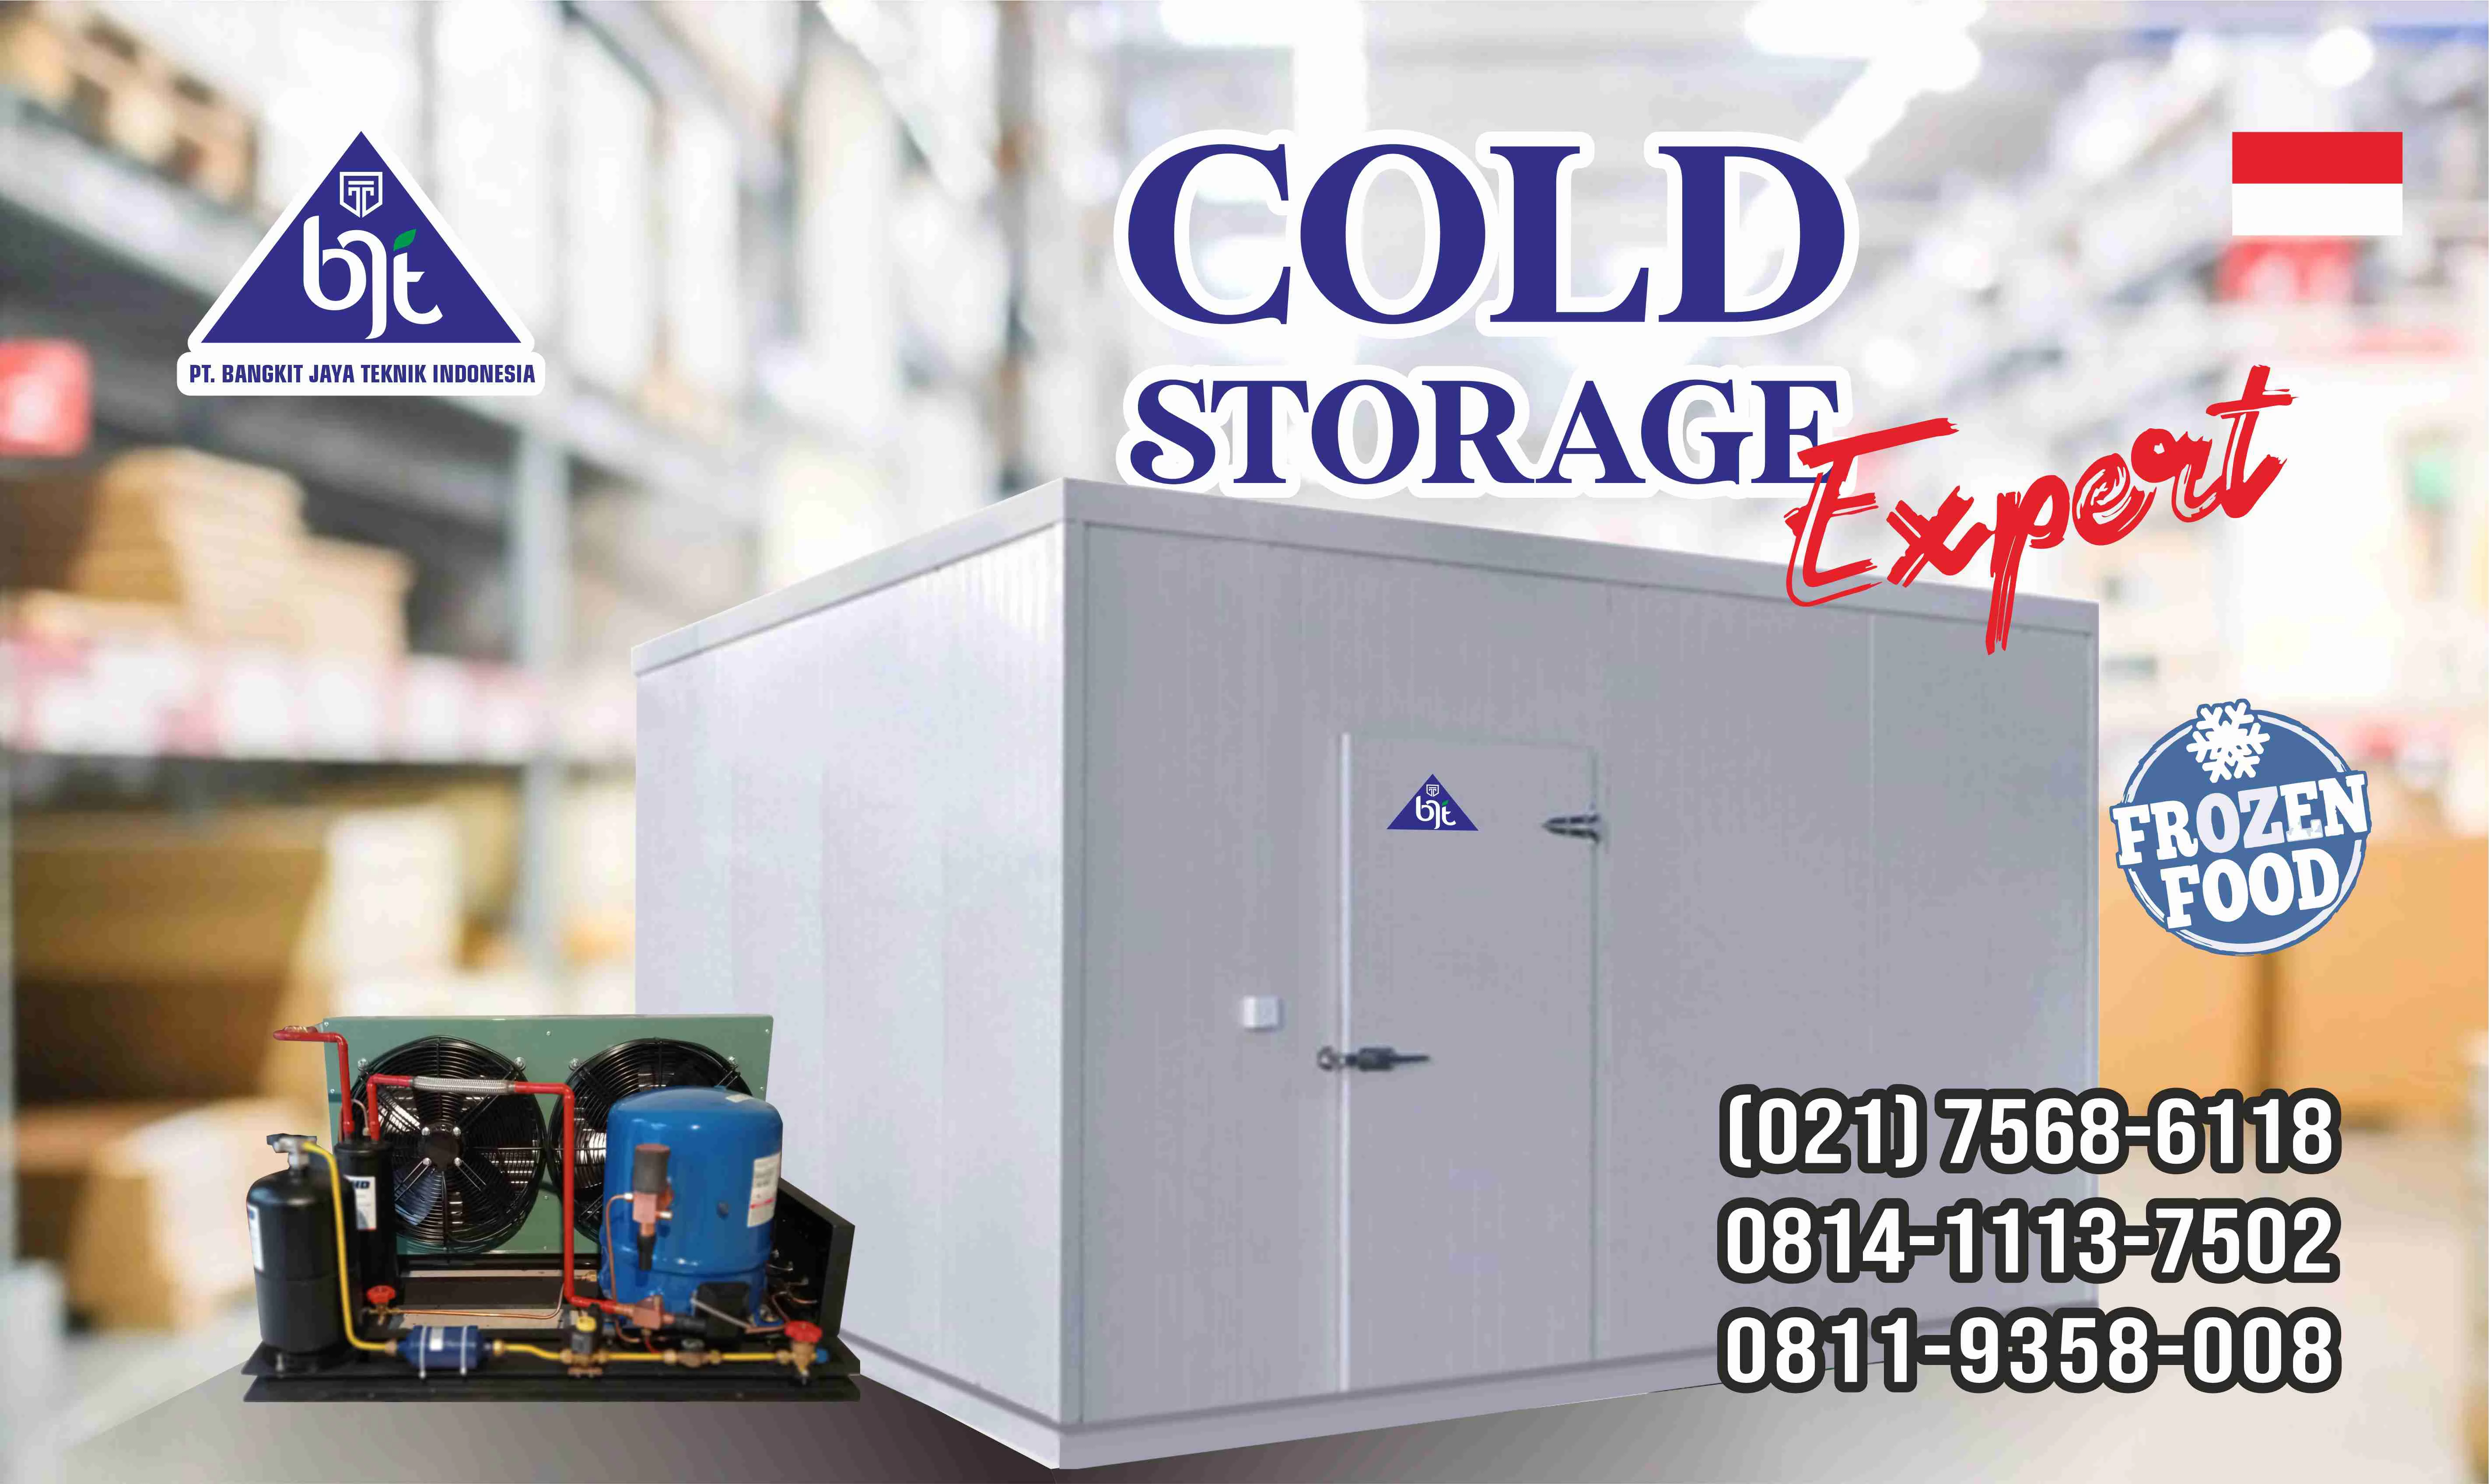 harga cold storage 5 ton di indonesia